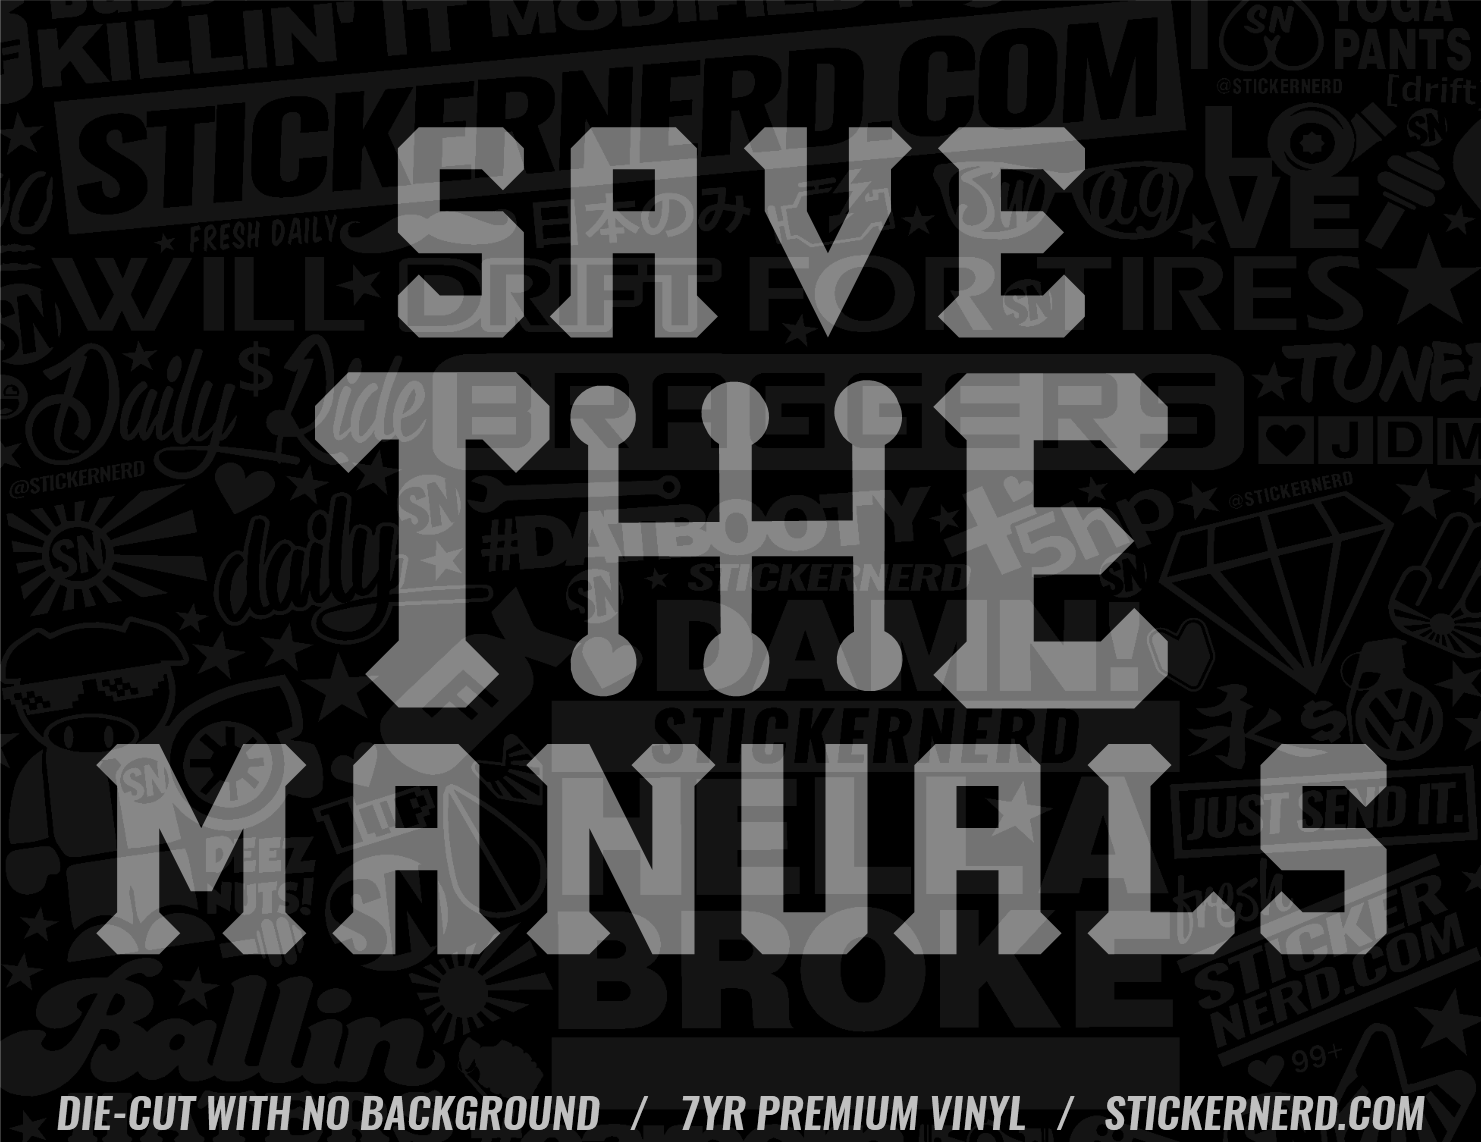 Save The Manuals Sticker - STICKERNERD.COM